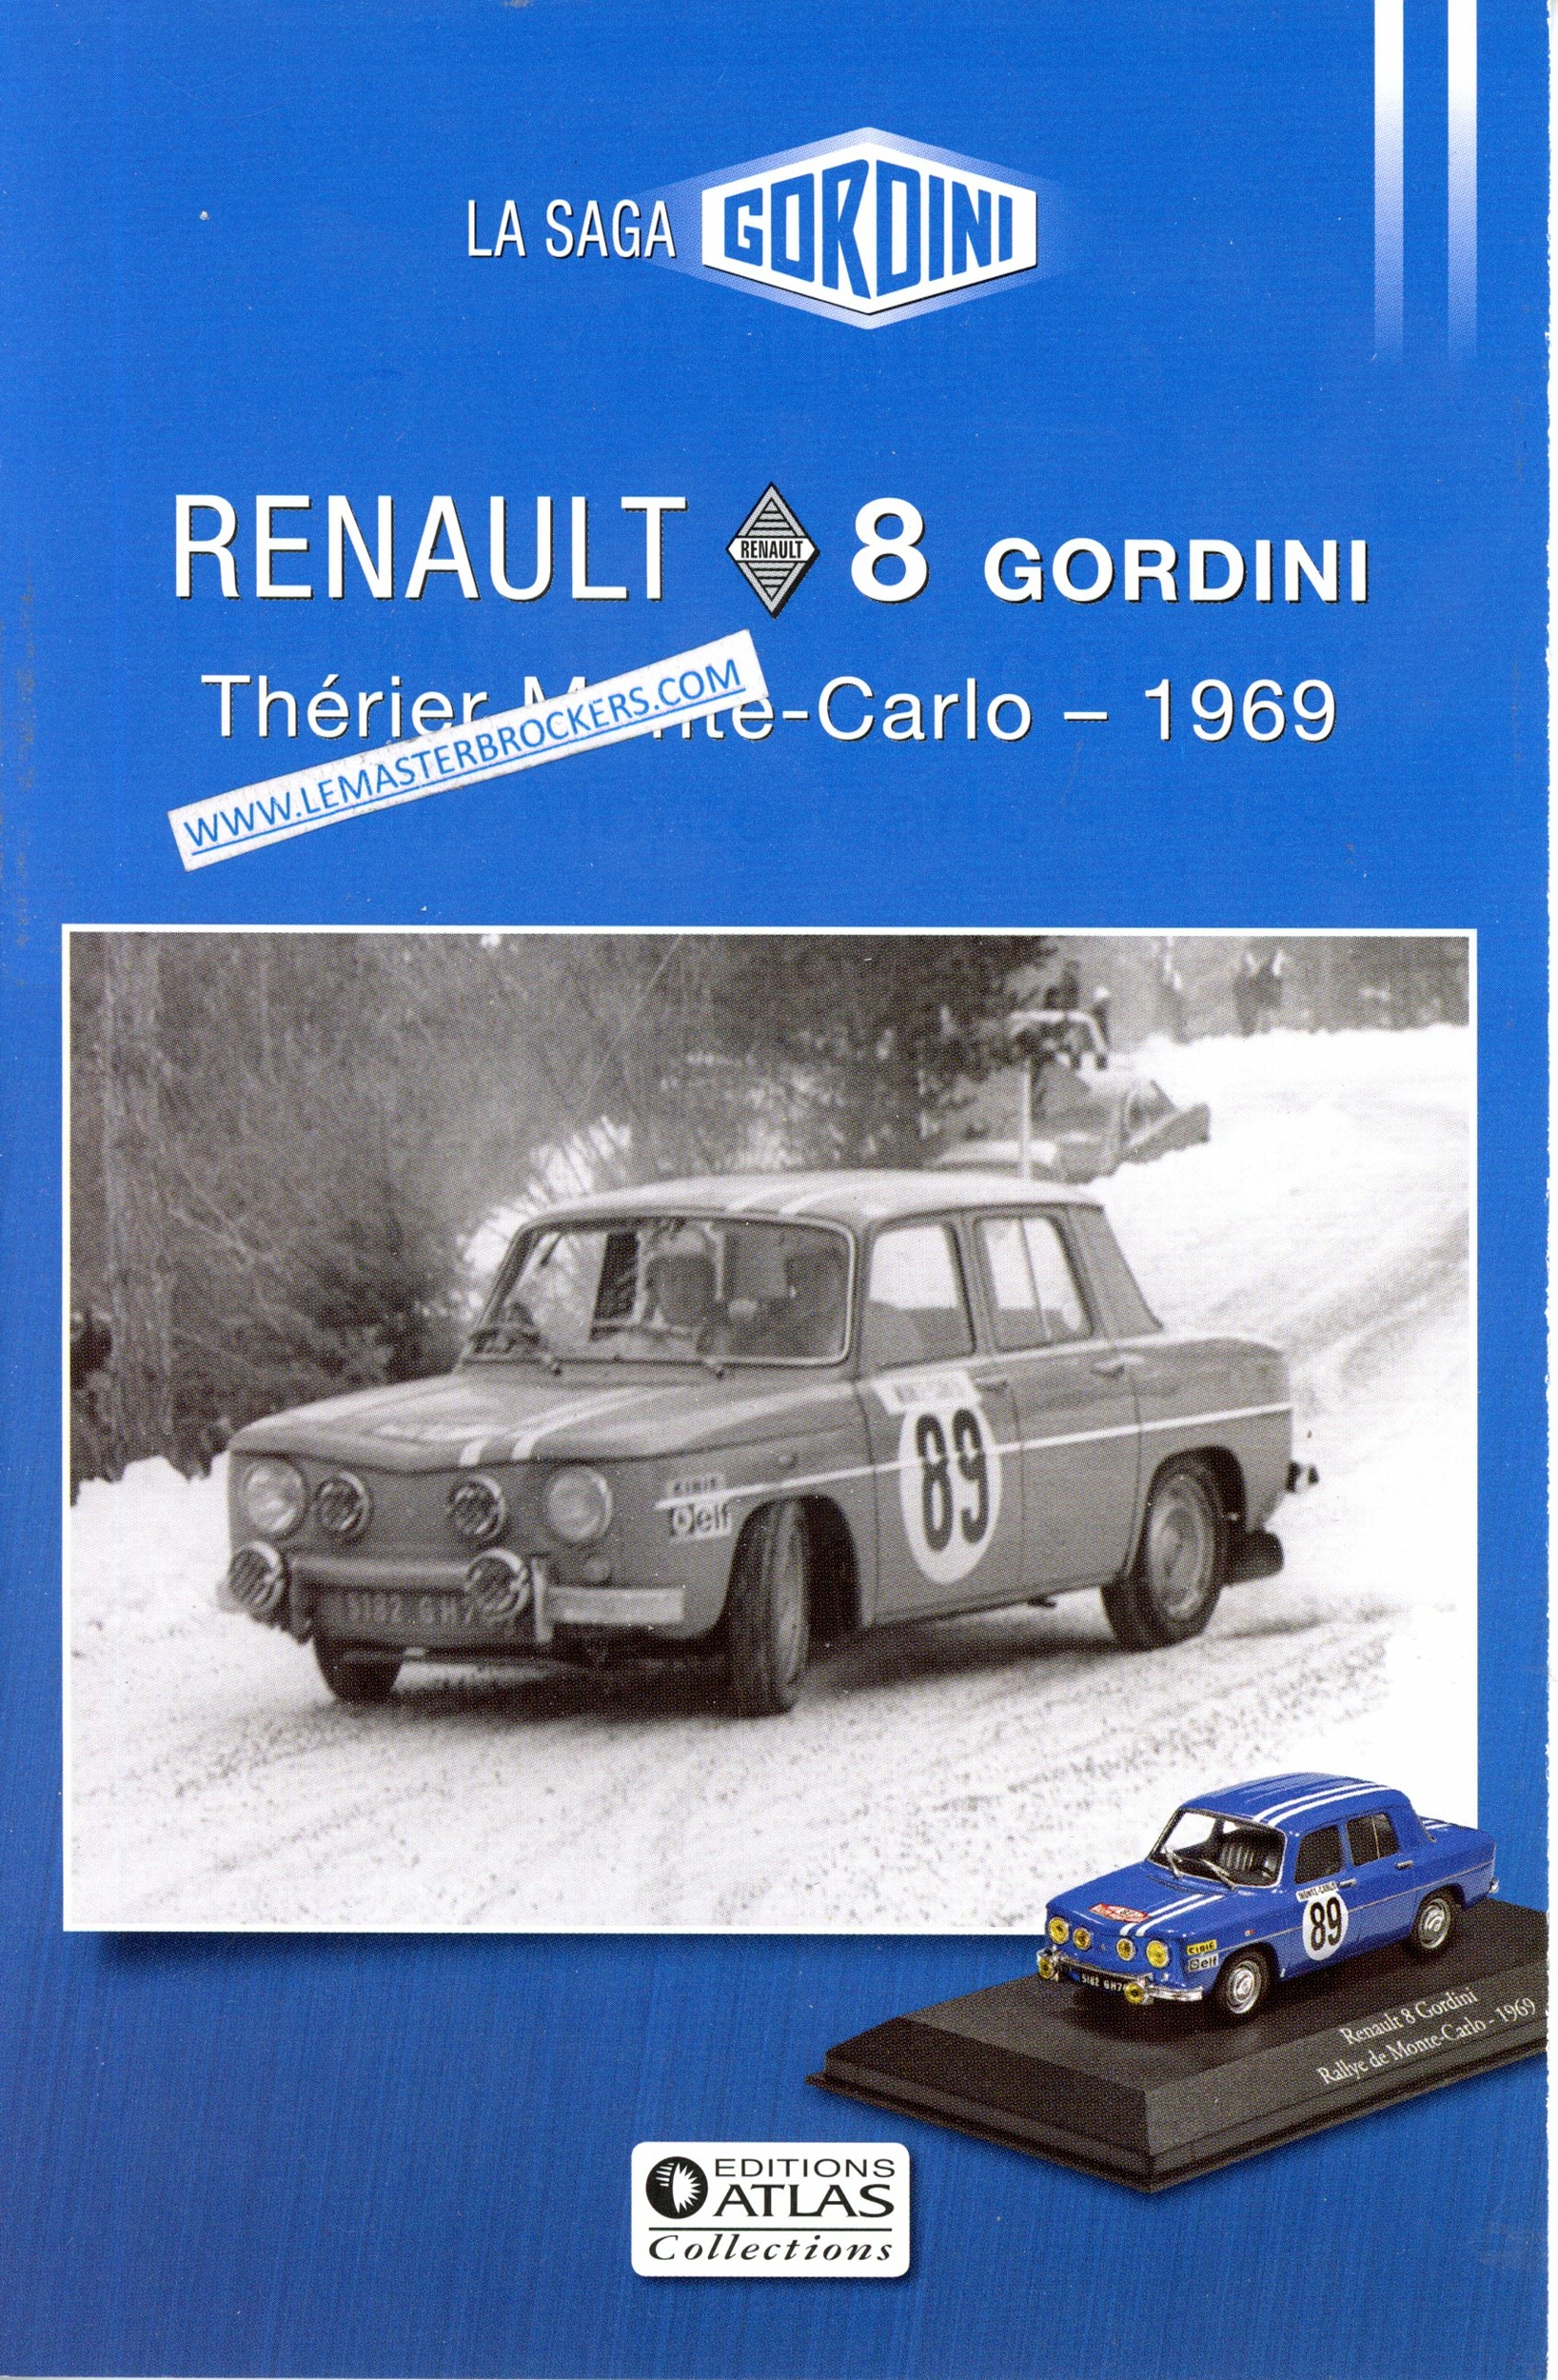 BROCHURE SAGA GORDINI R8 RENAULT 8 THERIER MONTE-CARLO 1969